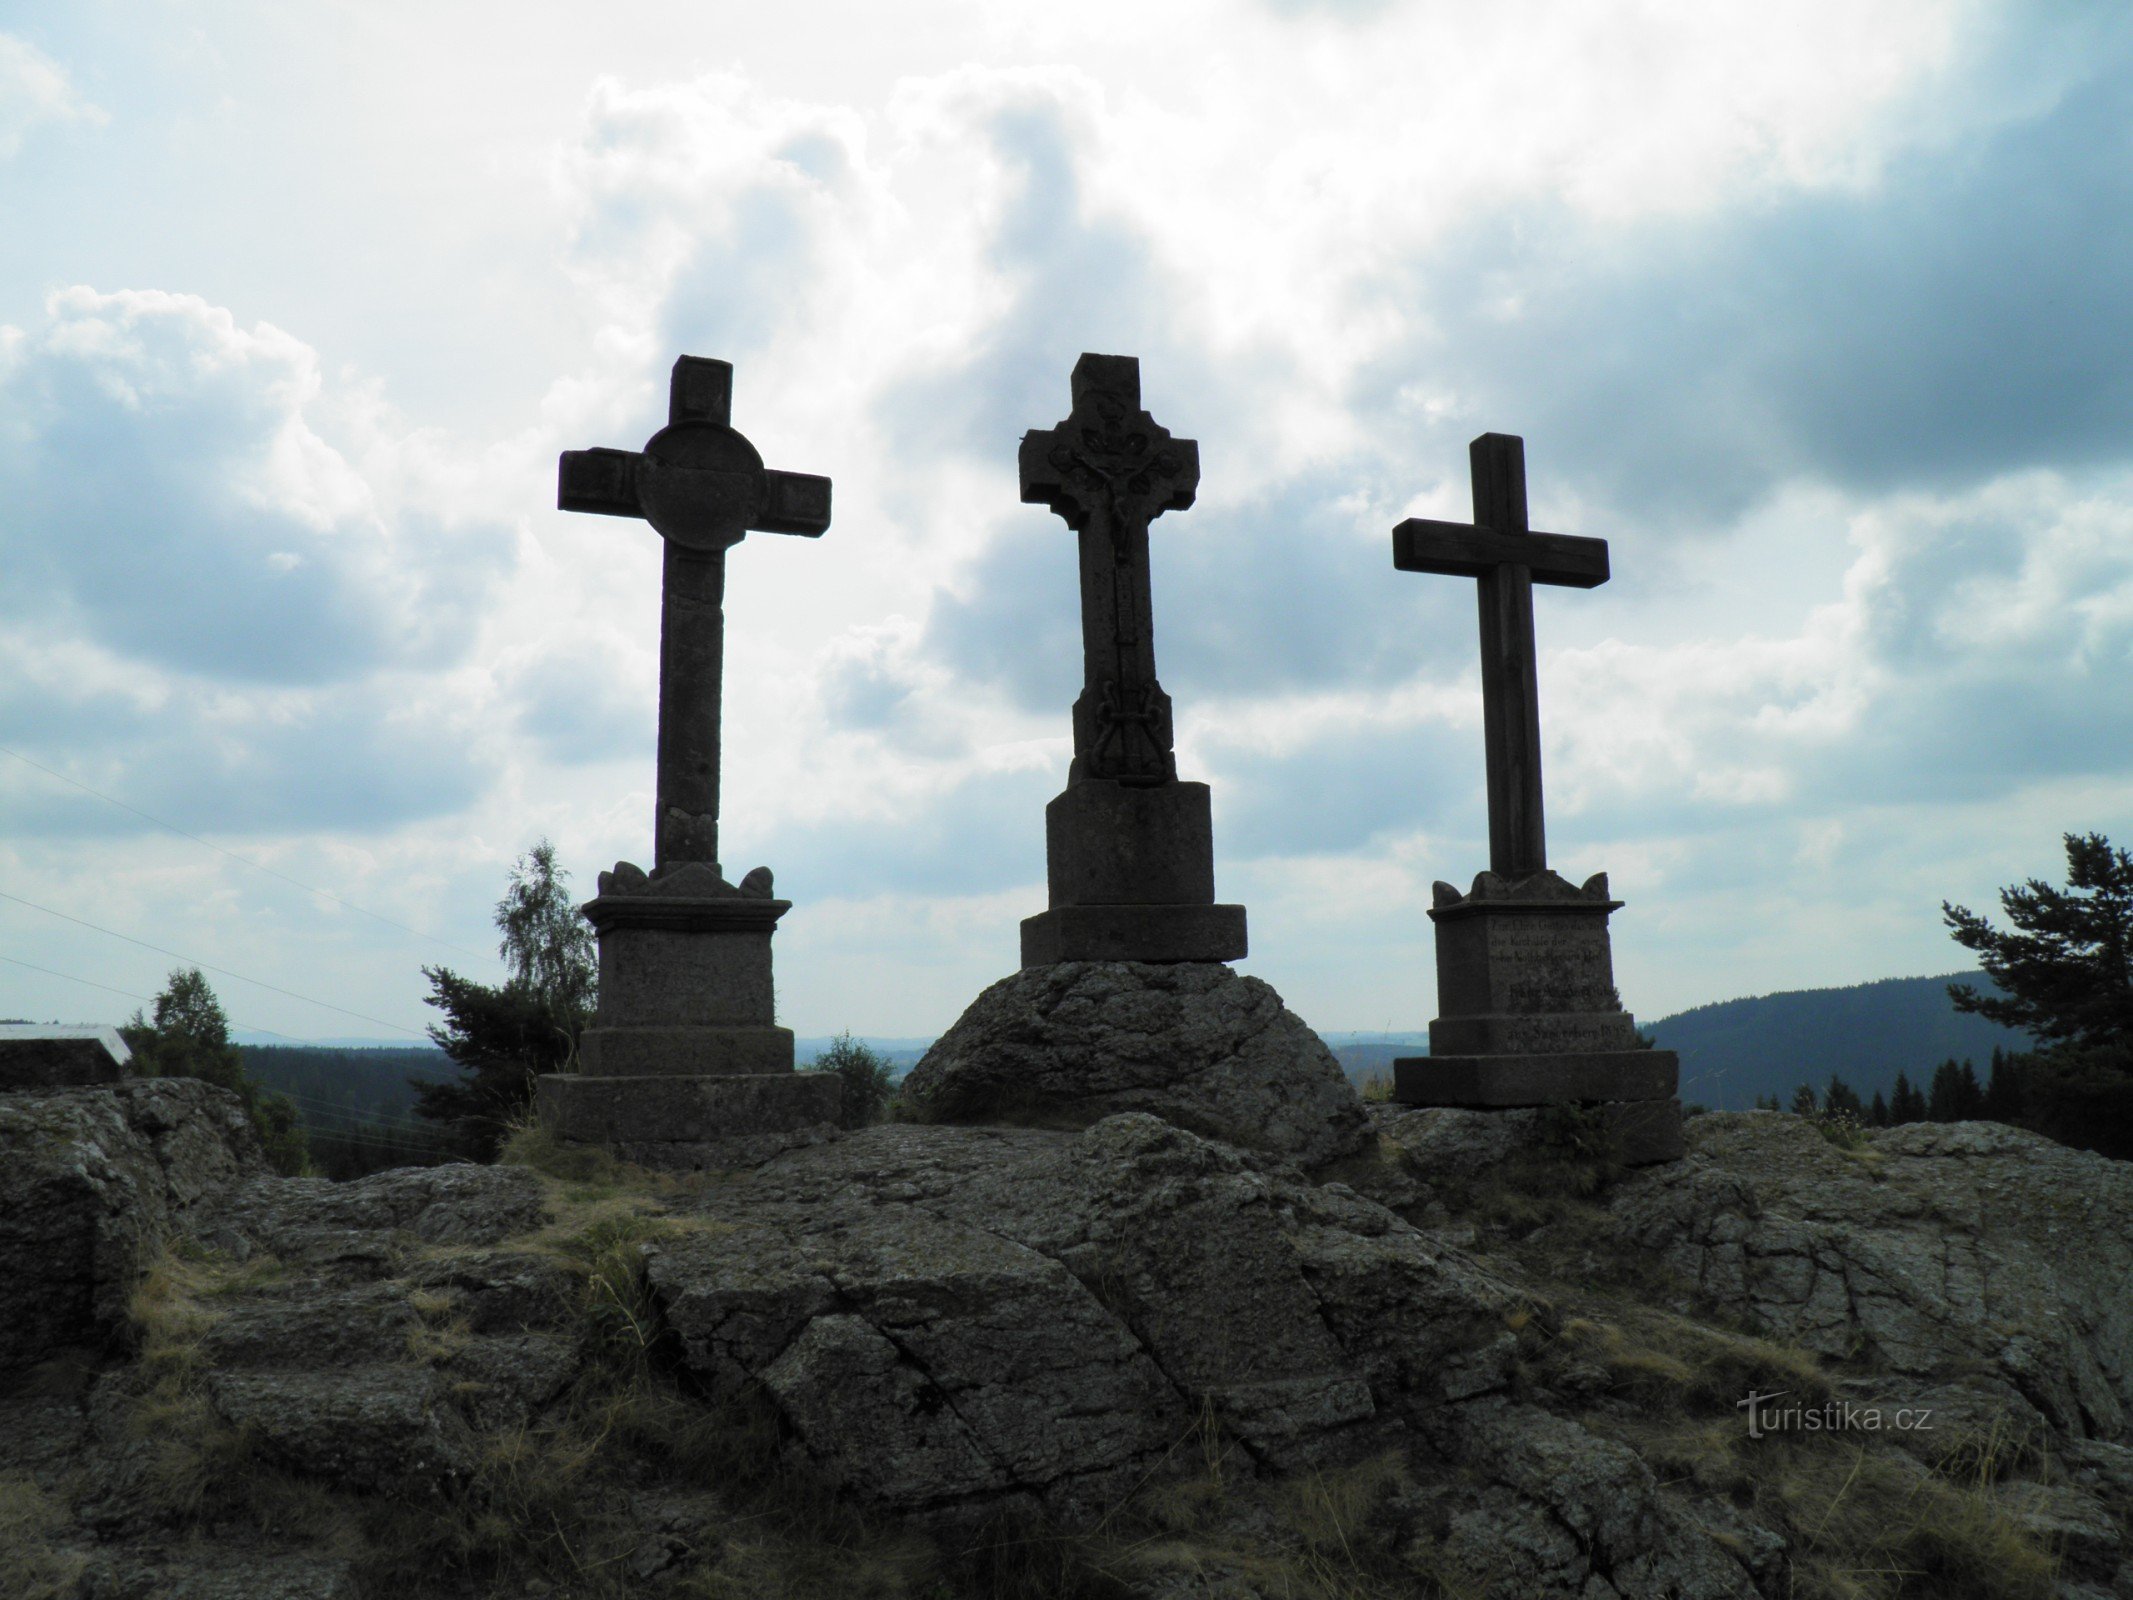 Prameny の村の近くの XNUMX つの十字架。